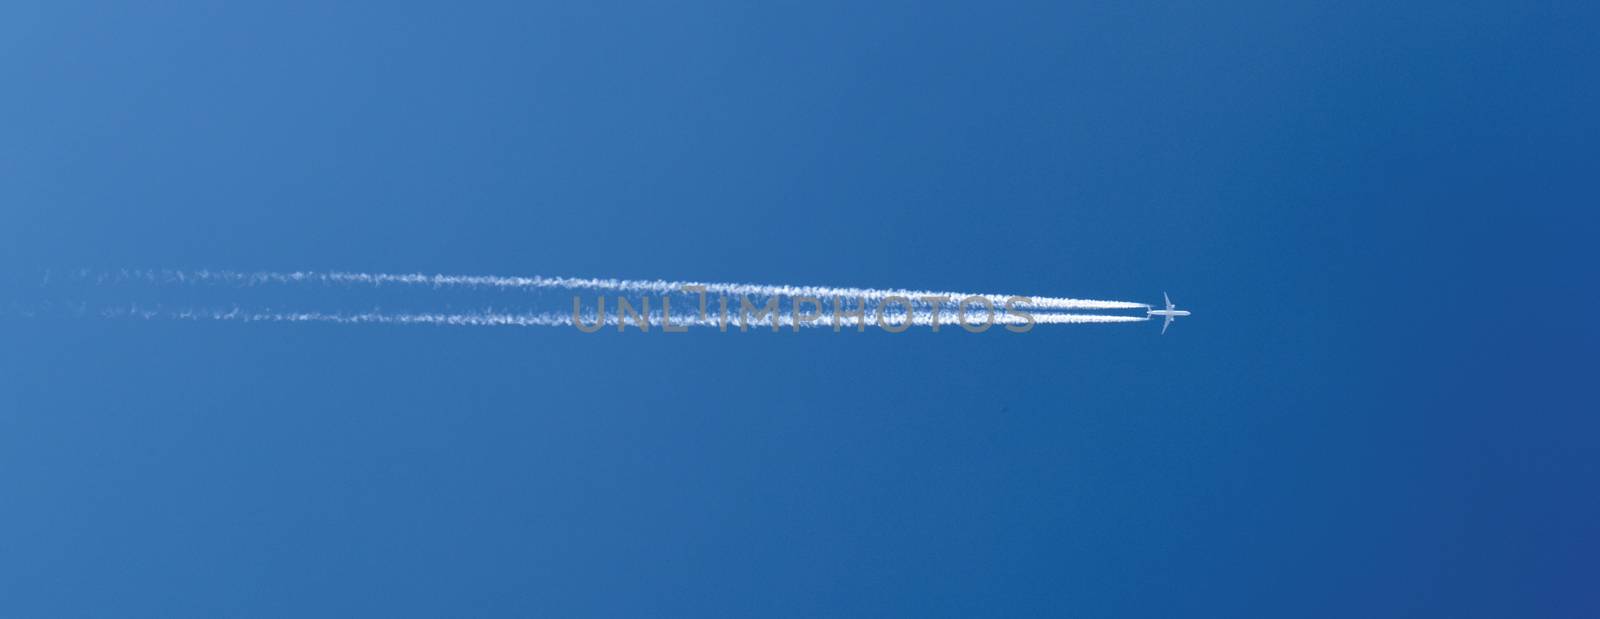 aircraft in a clear blue sky by NagyDodo